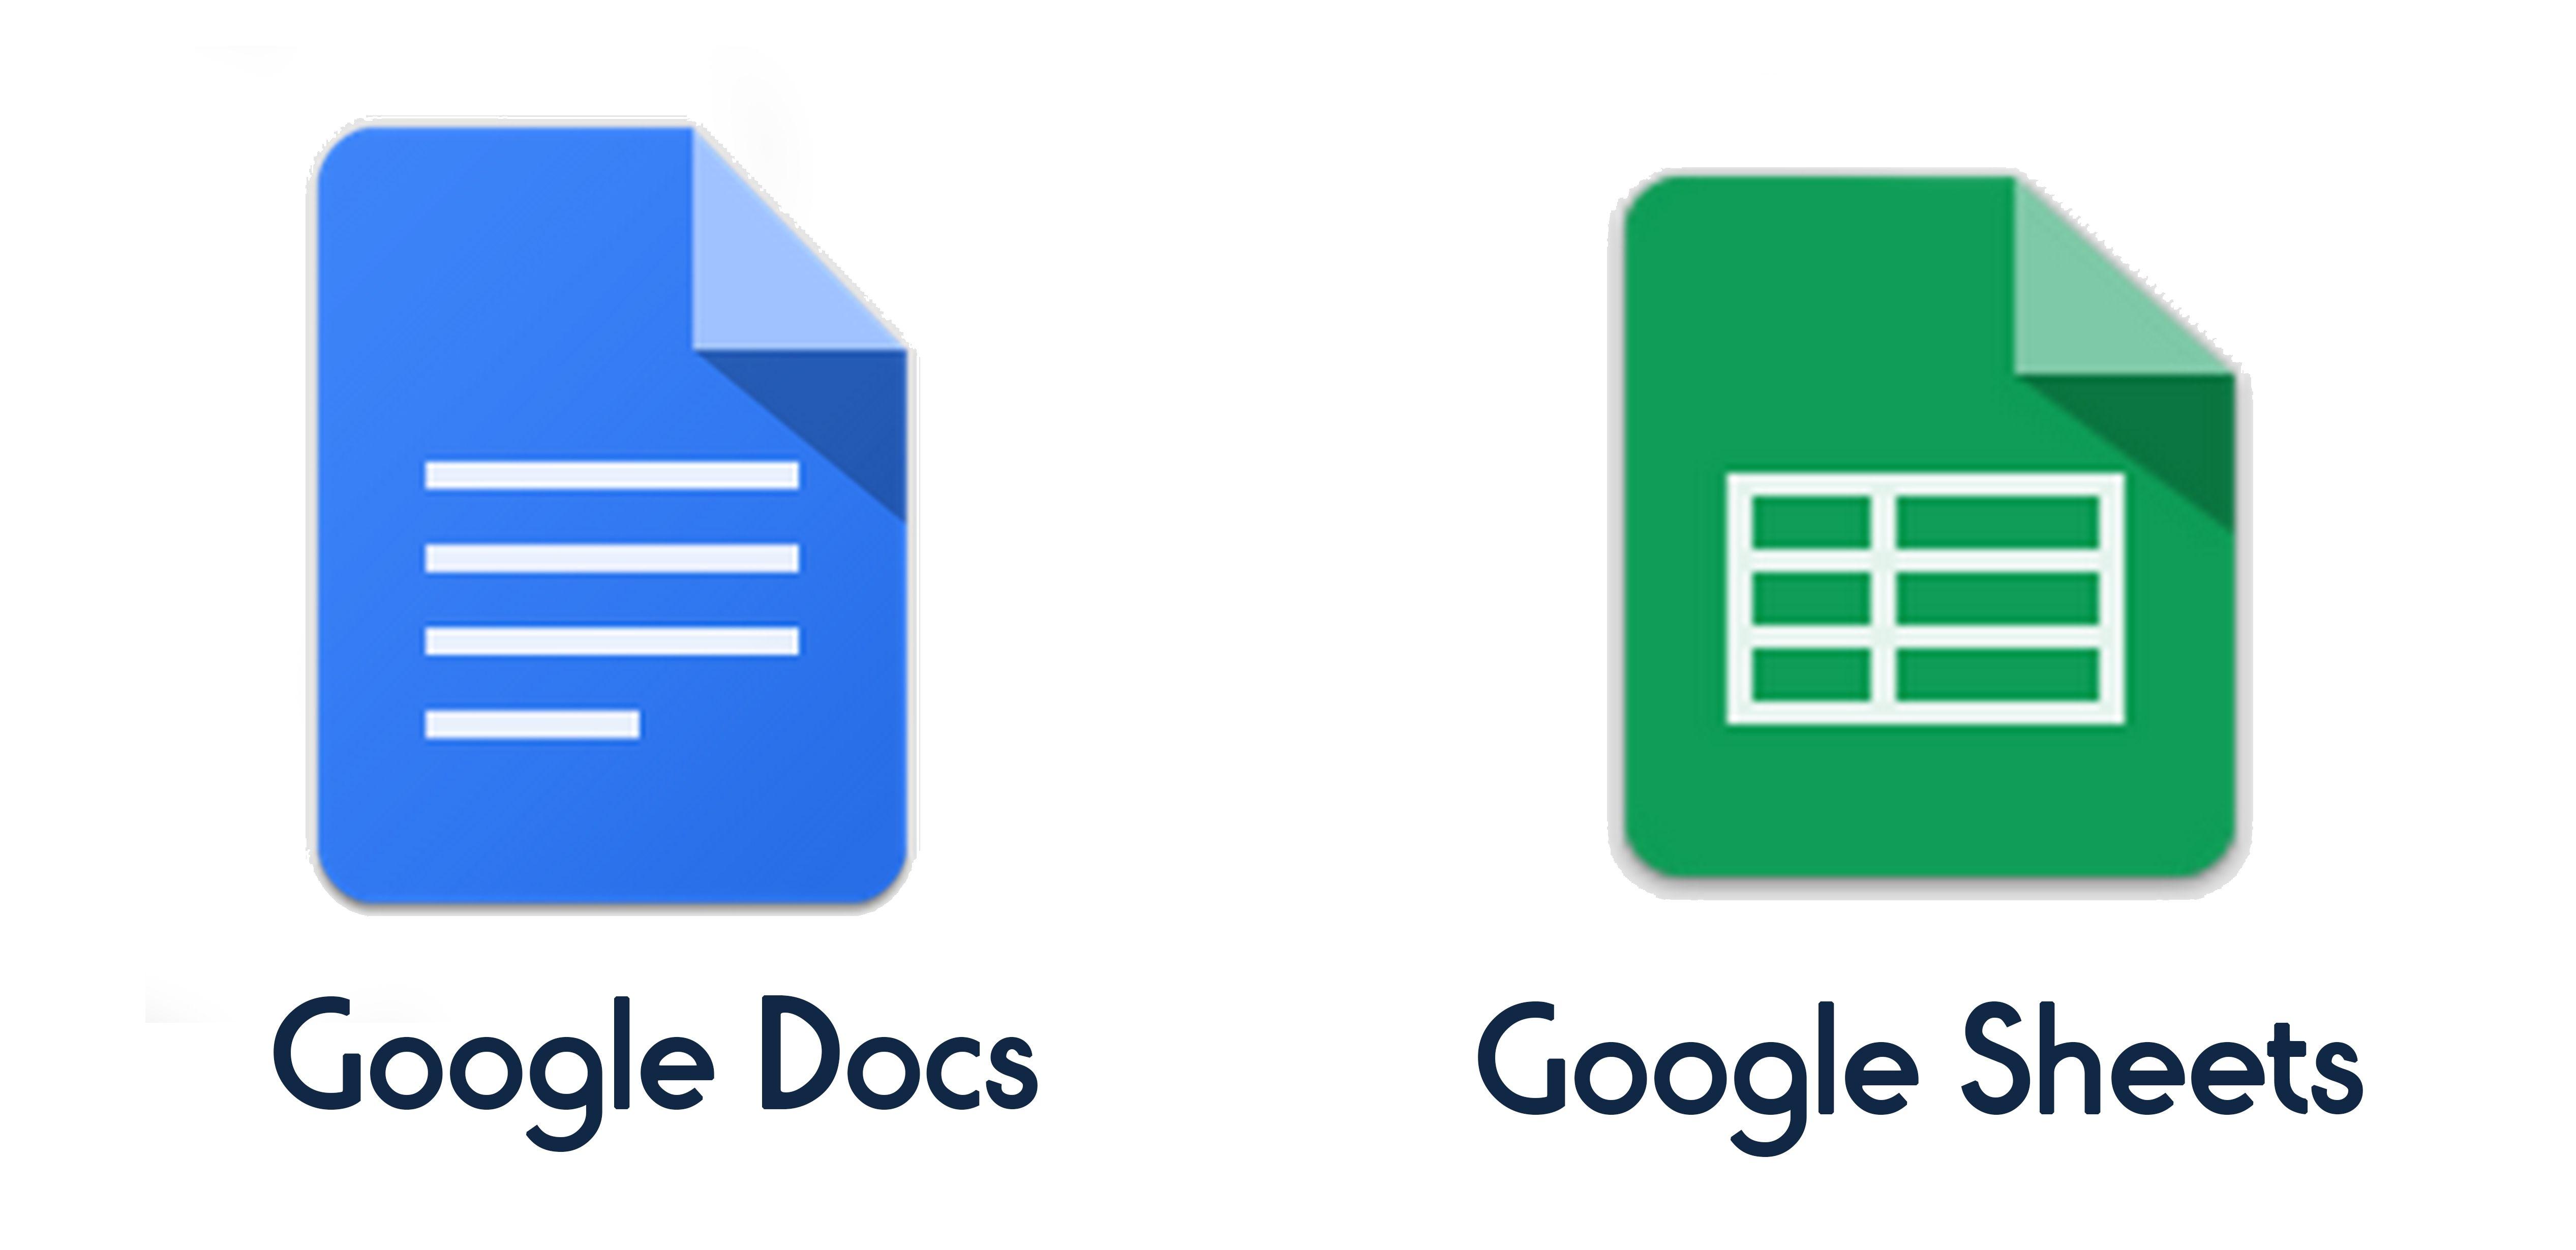 Google sheet php. Гугл документы. Гугл таблицы лого. Google docs документы. Гугл документы логотип.